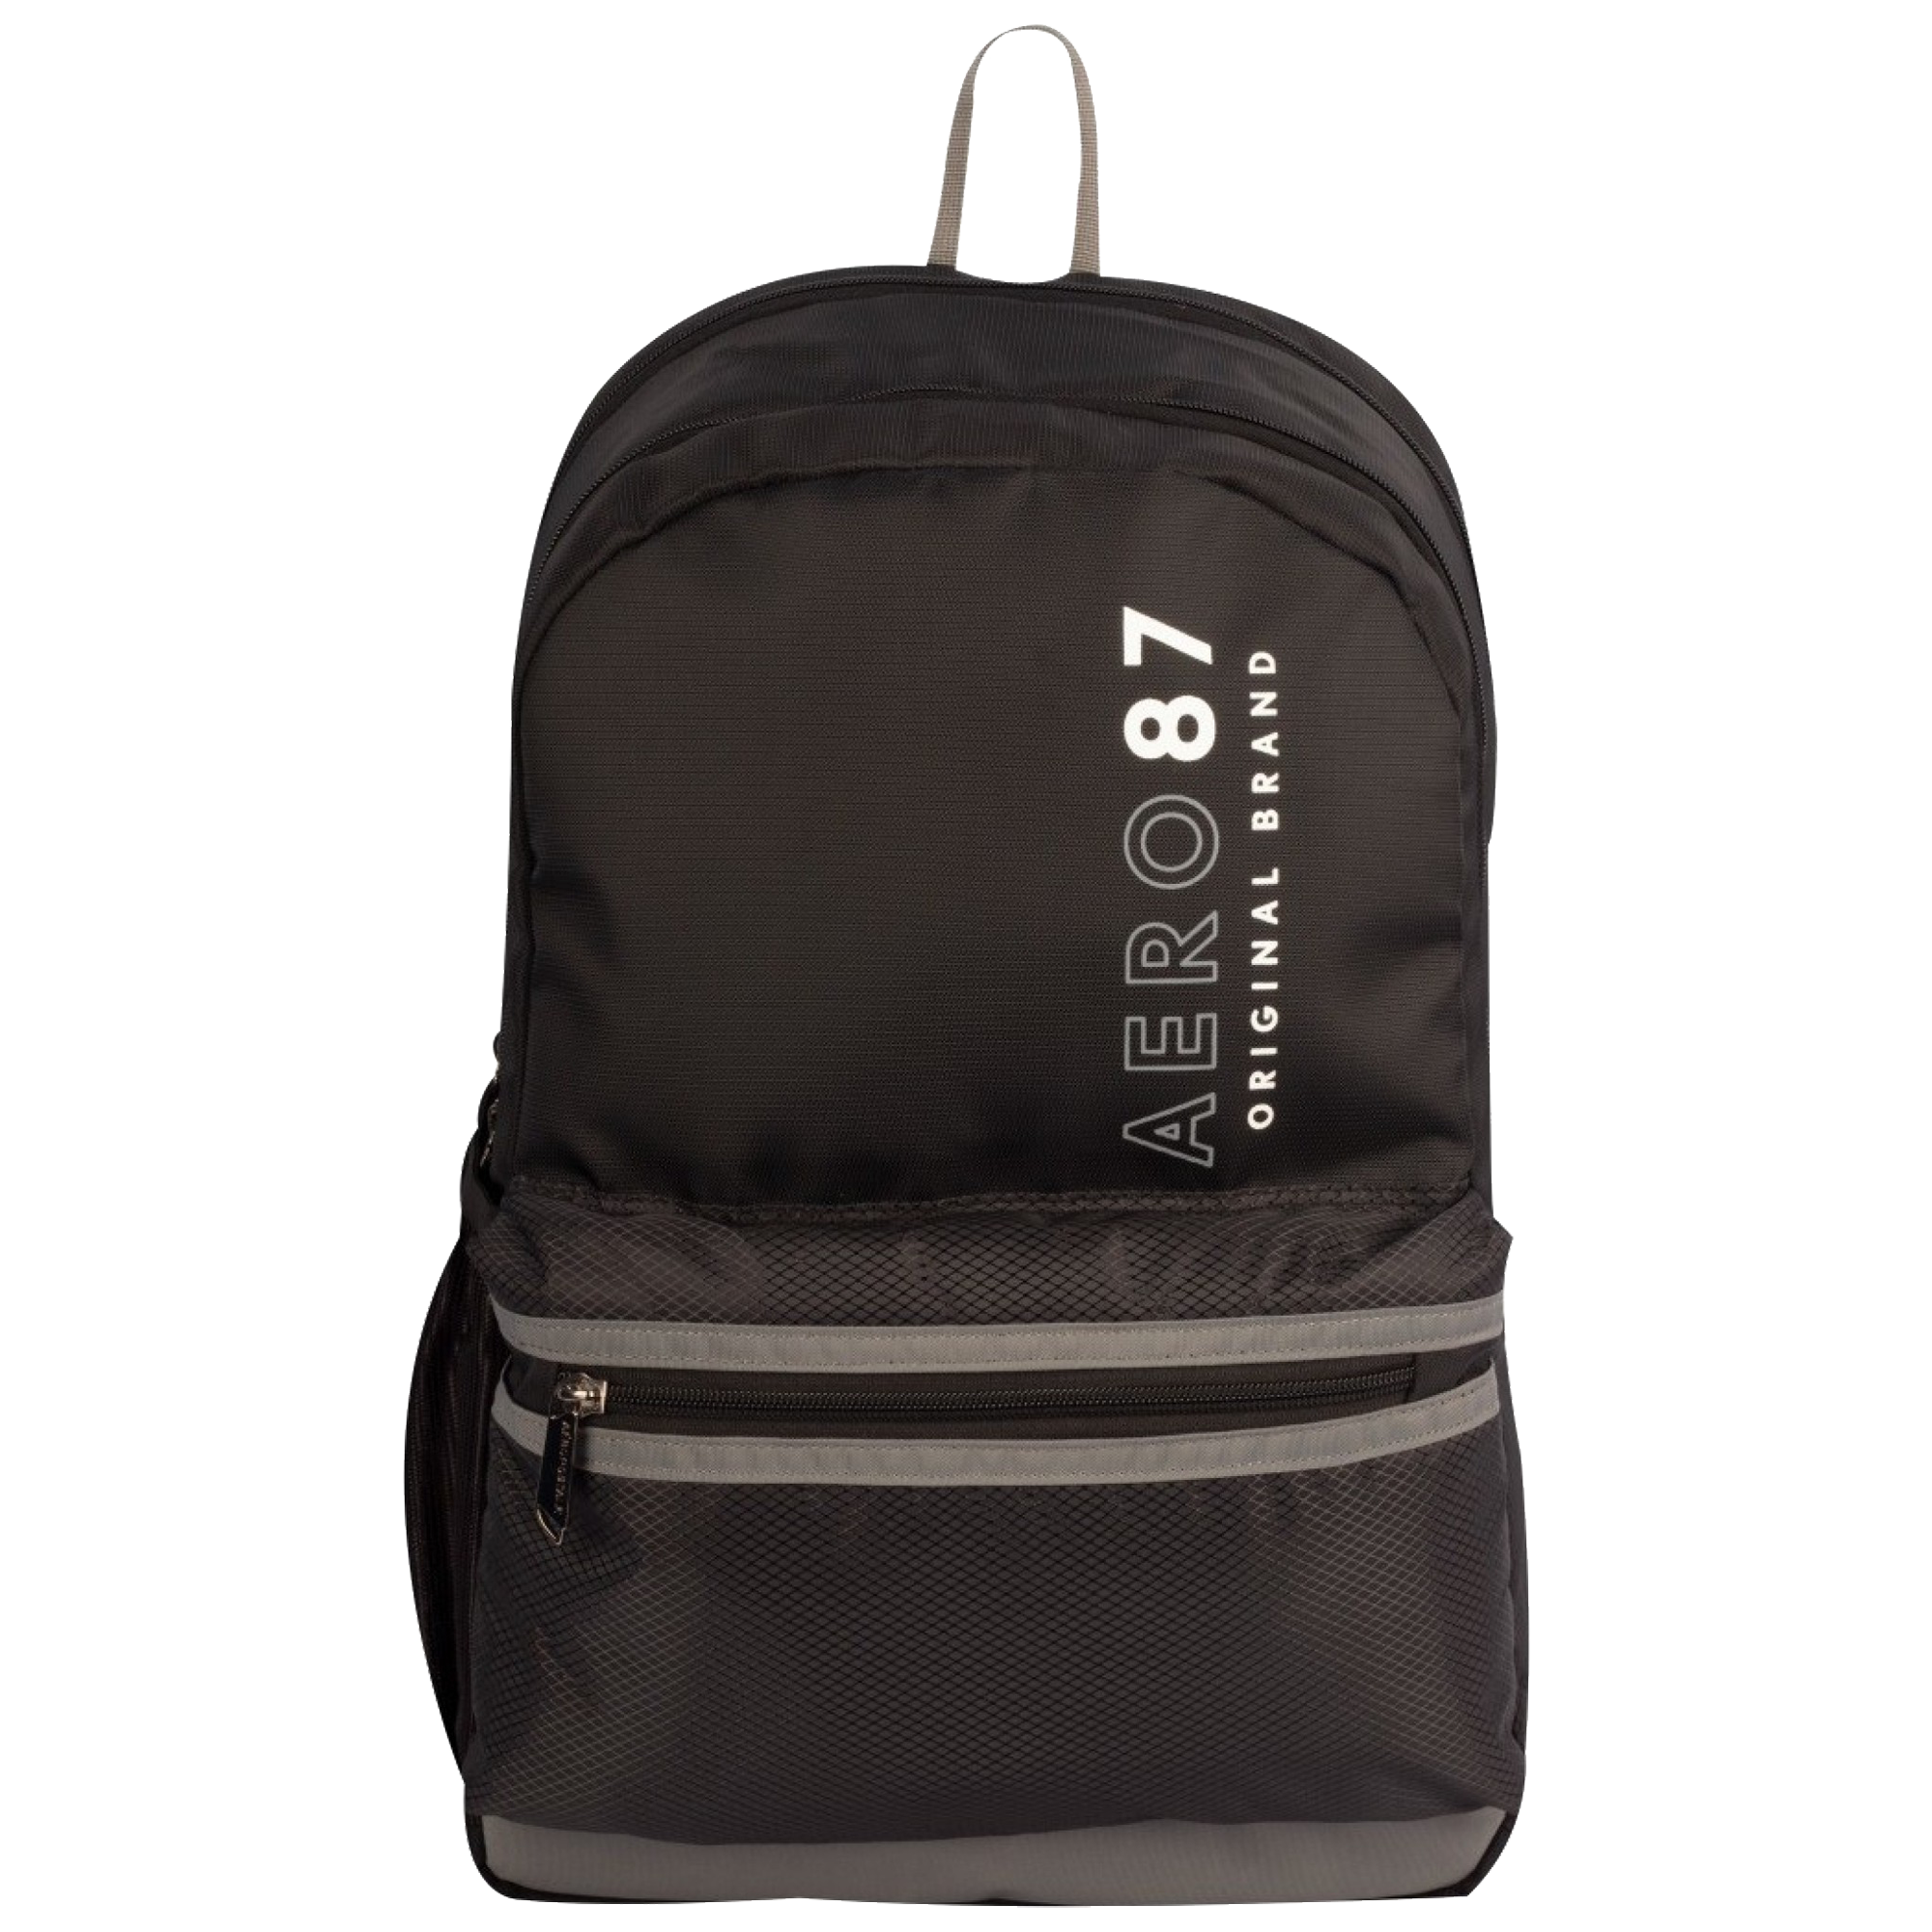 Aeropostale Take Off 20 Litres Nylon Backpack (Waterproof, AERO-BP-1001-BLK_G, Black/Grey)_1